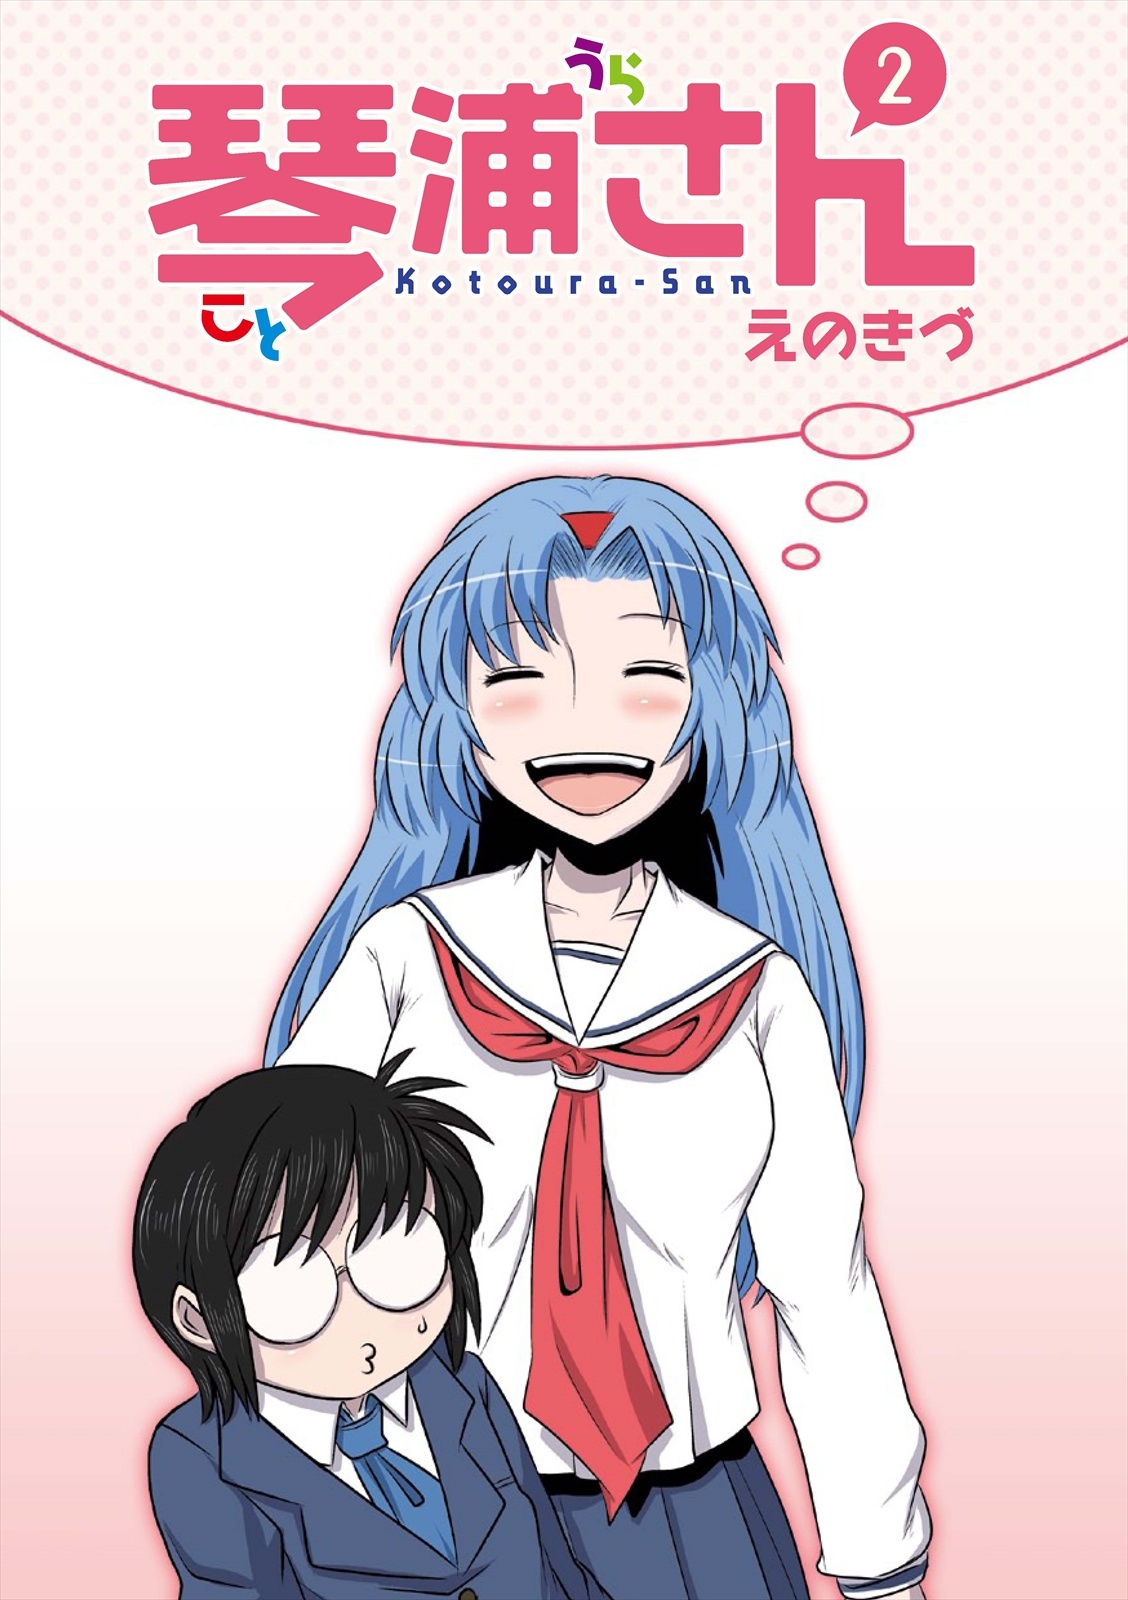 Kotoura-San Vol 3 (Shojo Manga) (English Edition) - eBooks em